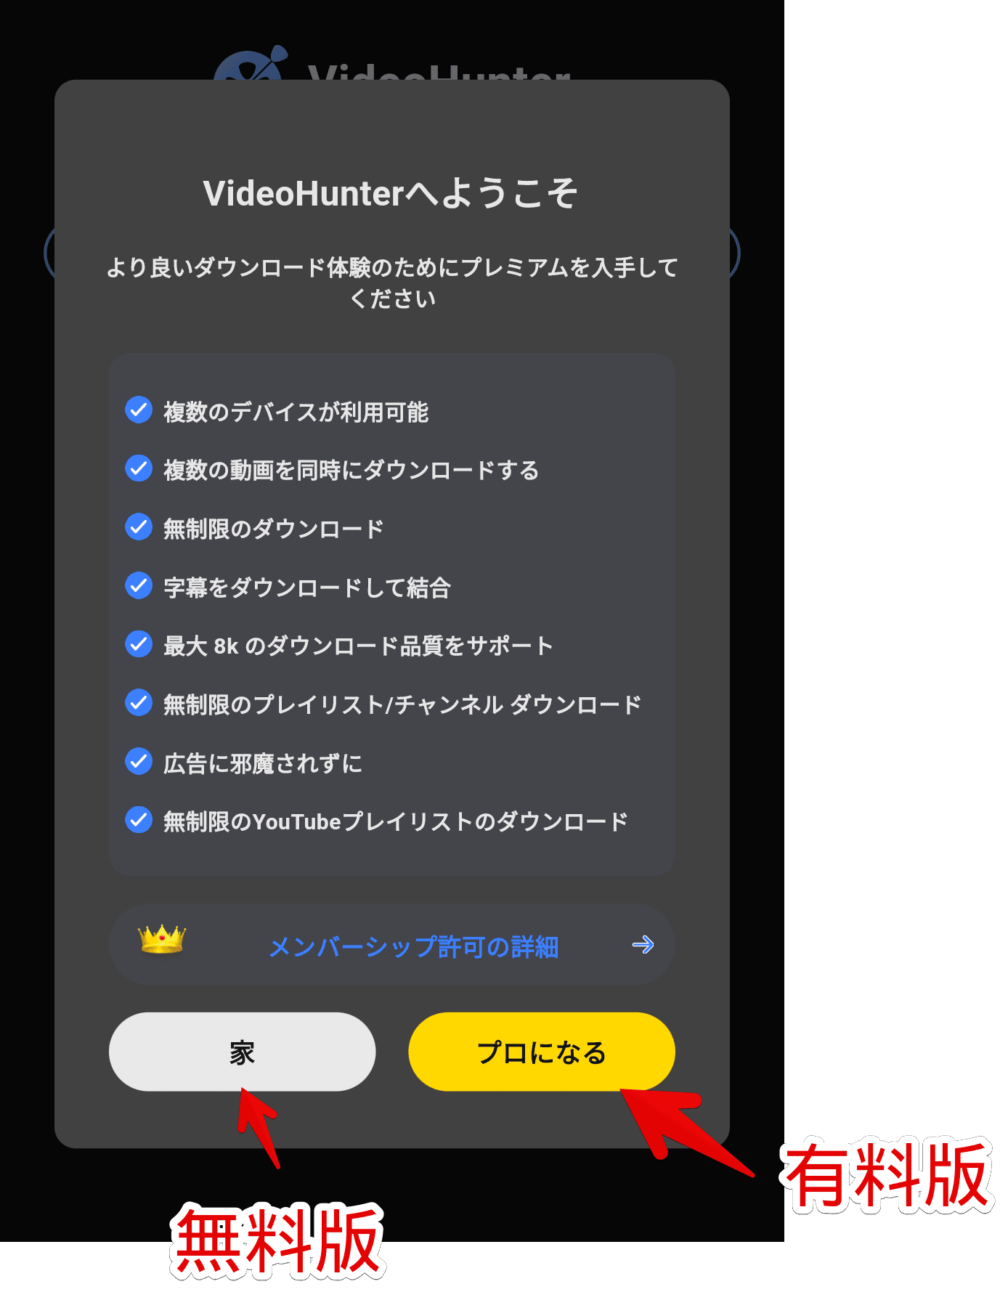 「VideoHunterへようこそ」ポップアップ画像